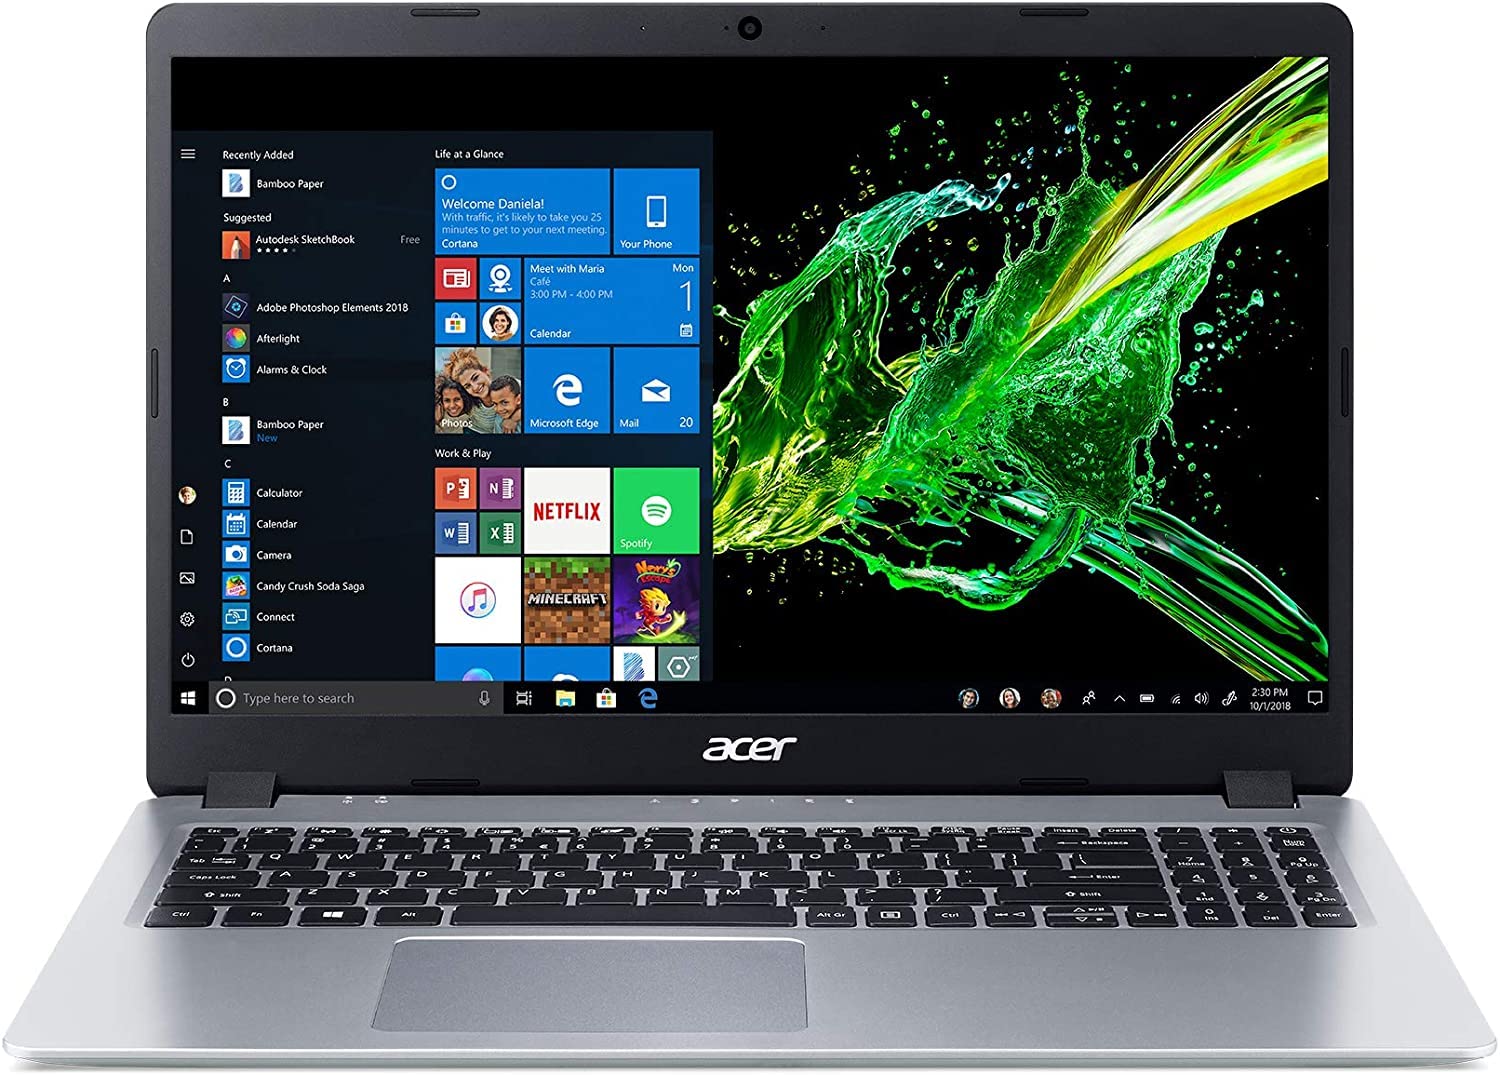 Acer Aspire 5 15 Laptop, AMD 2-Core Ryzen 3 3200U, 15.6